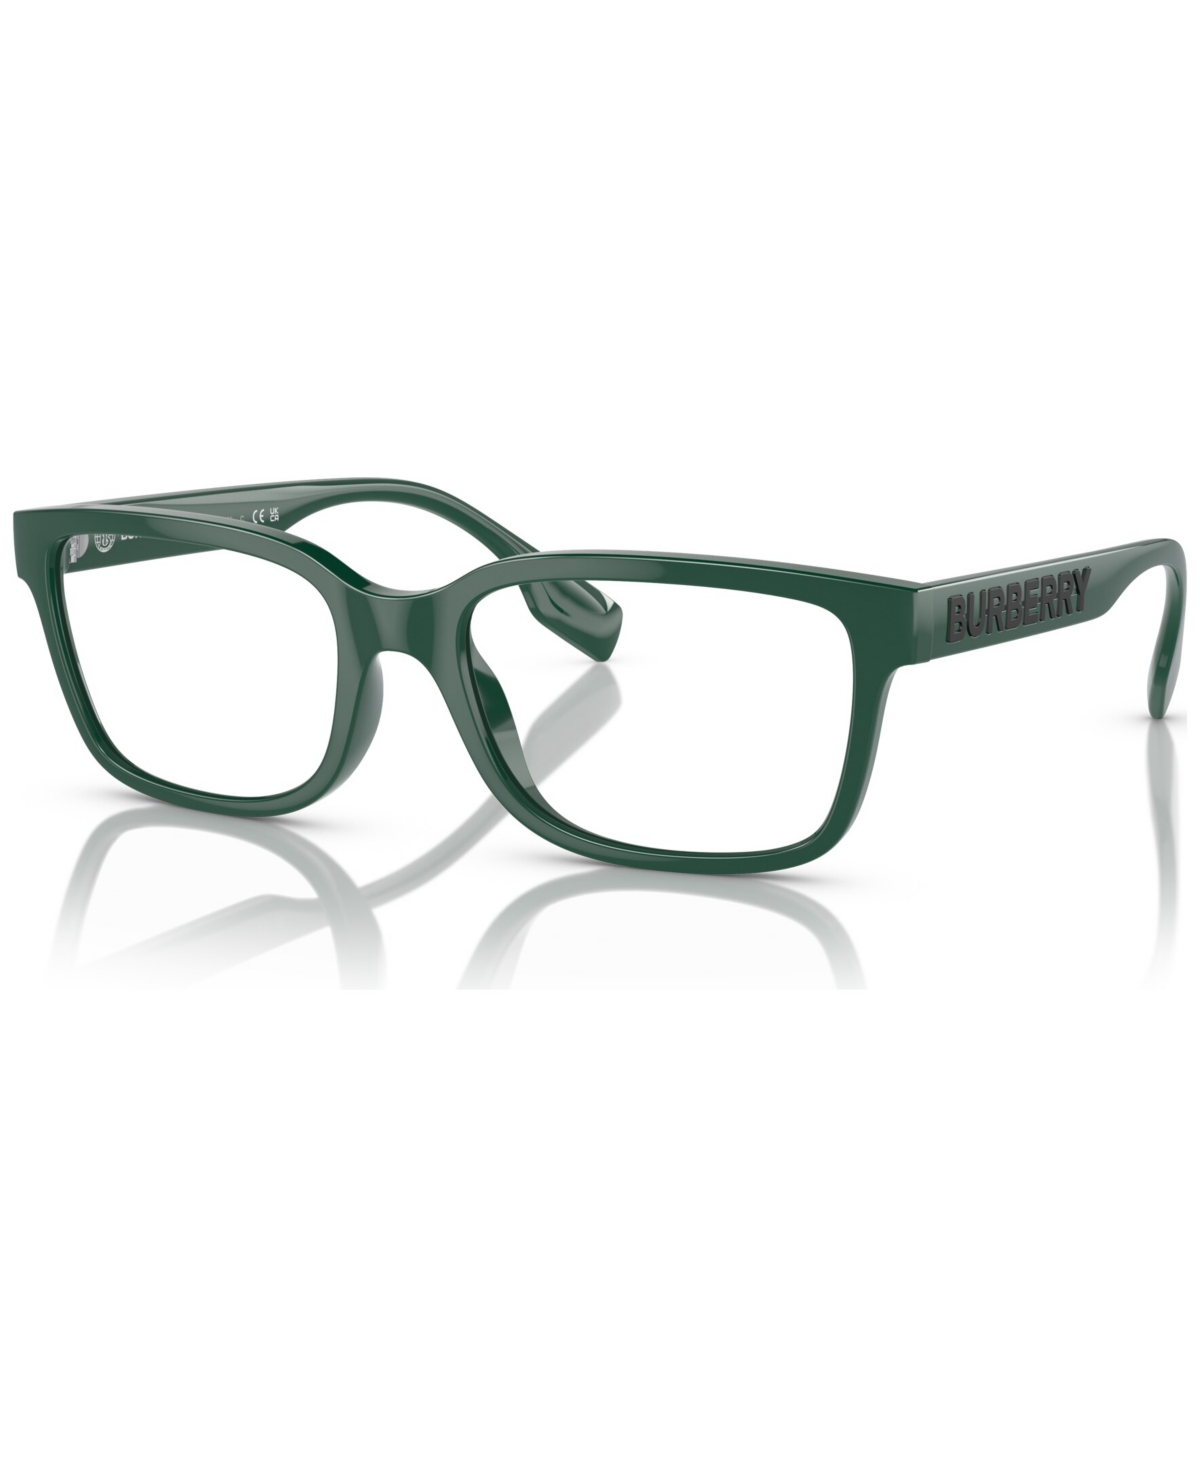 Men's Square Eyeglasses, BE2379U 55 - Green